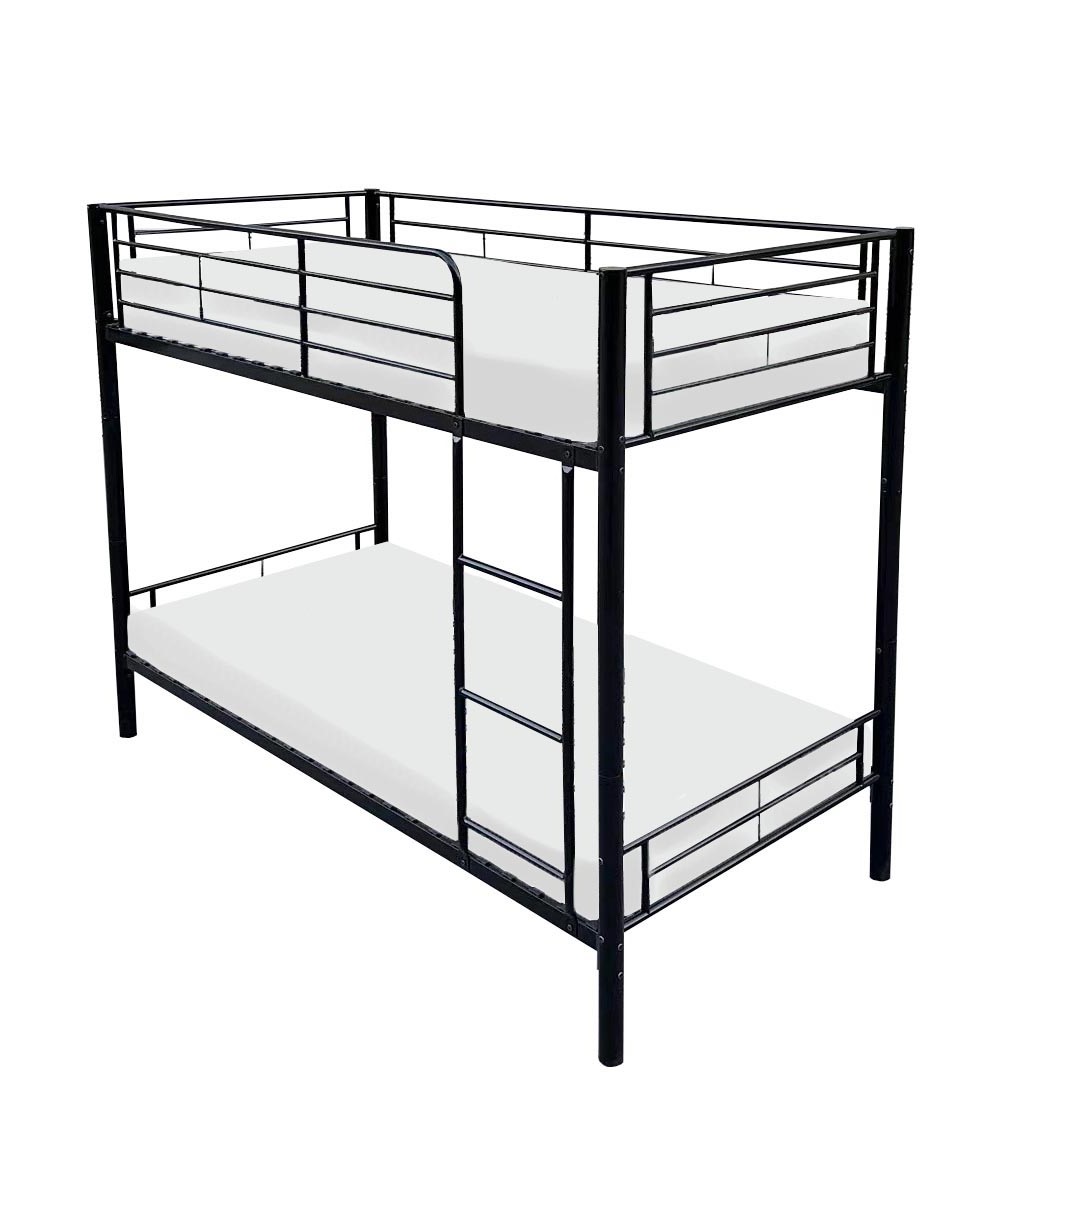 Harley Bunk Bed | UK Trade Supplier | Wholesale Beds | Metal